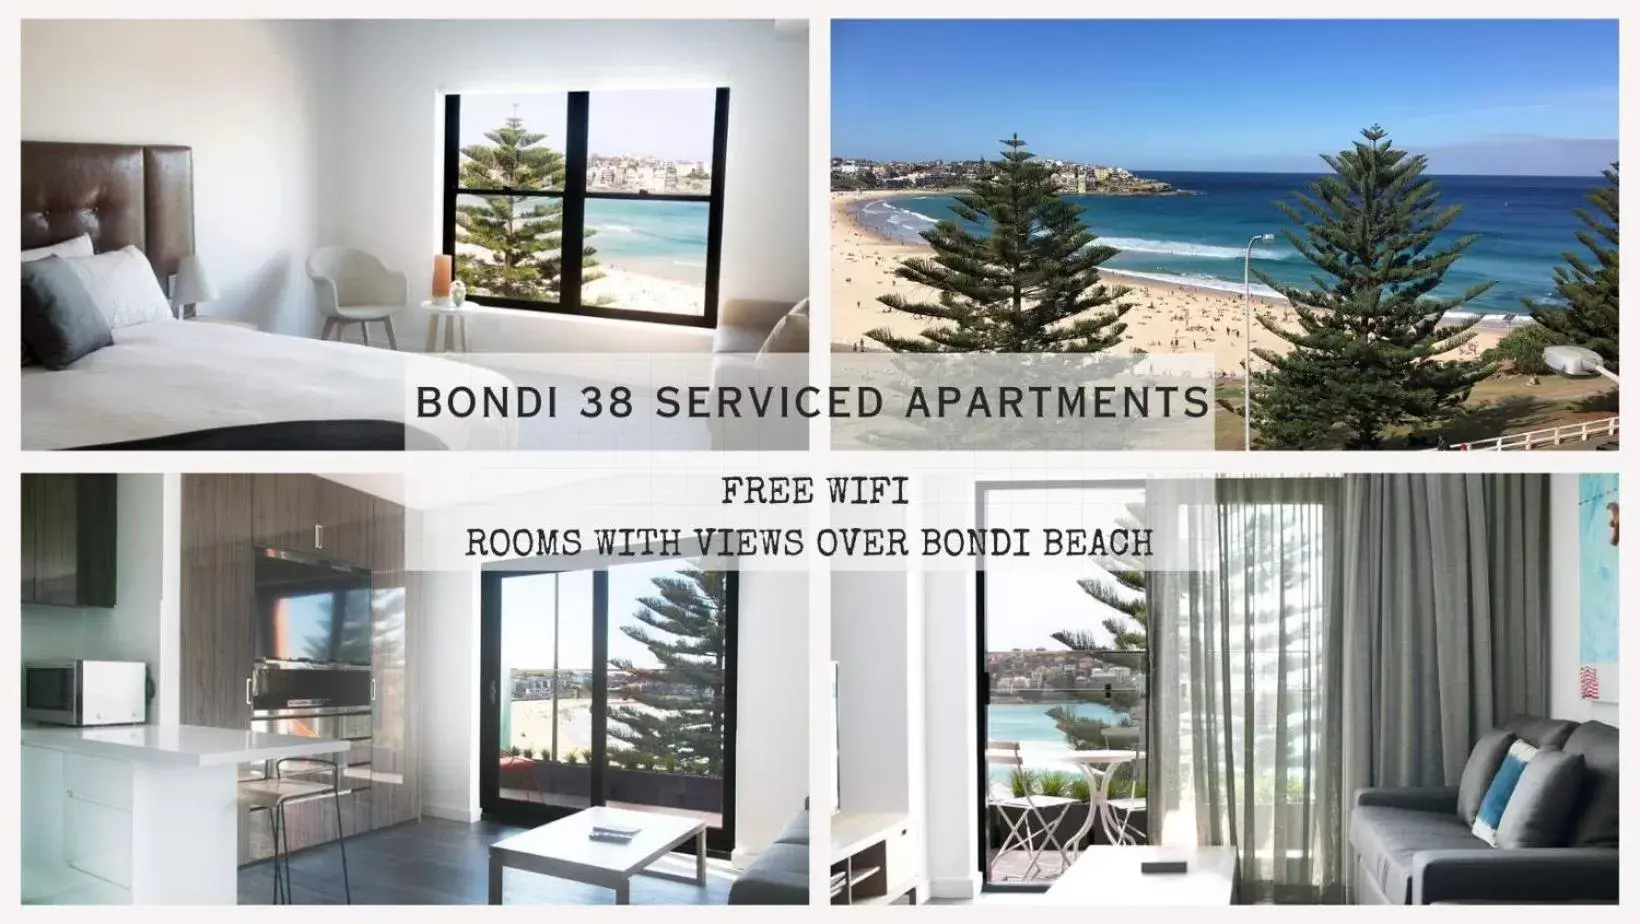 Bondi 38 Serviced Apartments